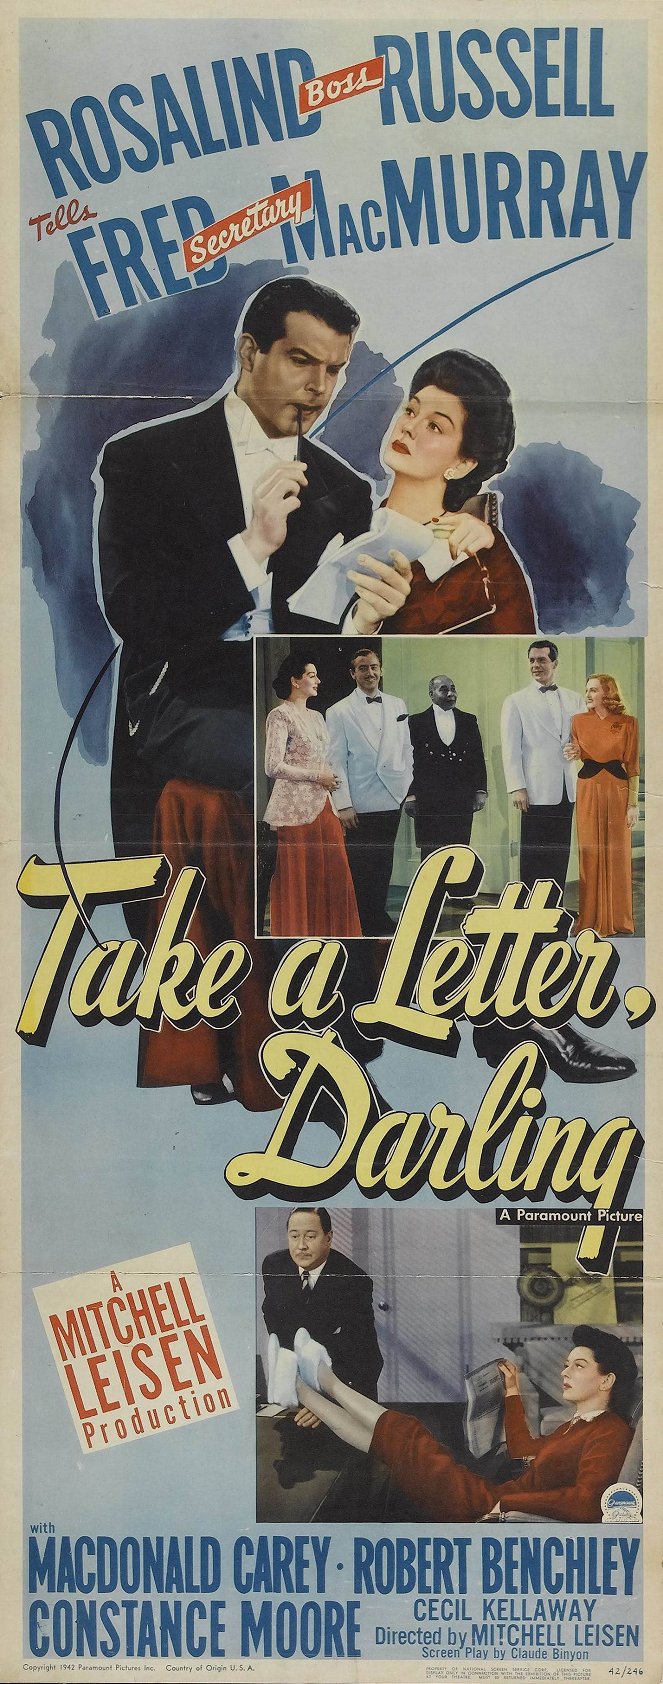 Take a Letter, Darling - Plakaty